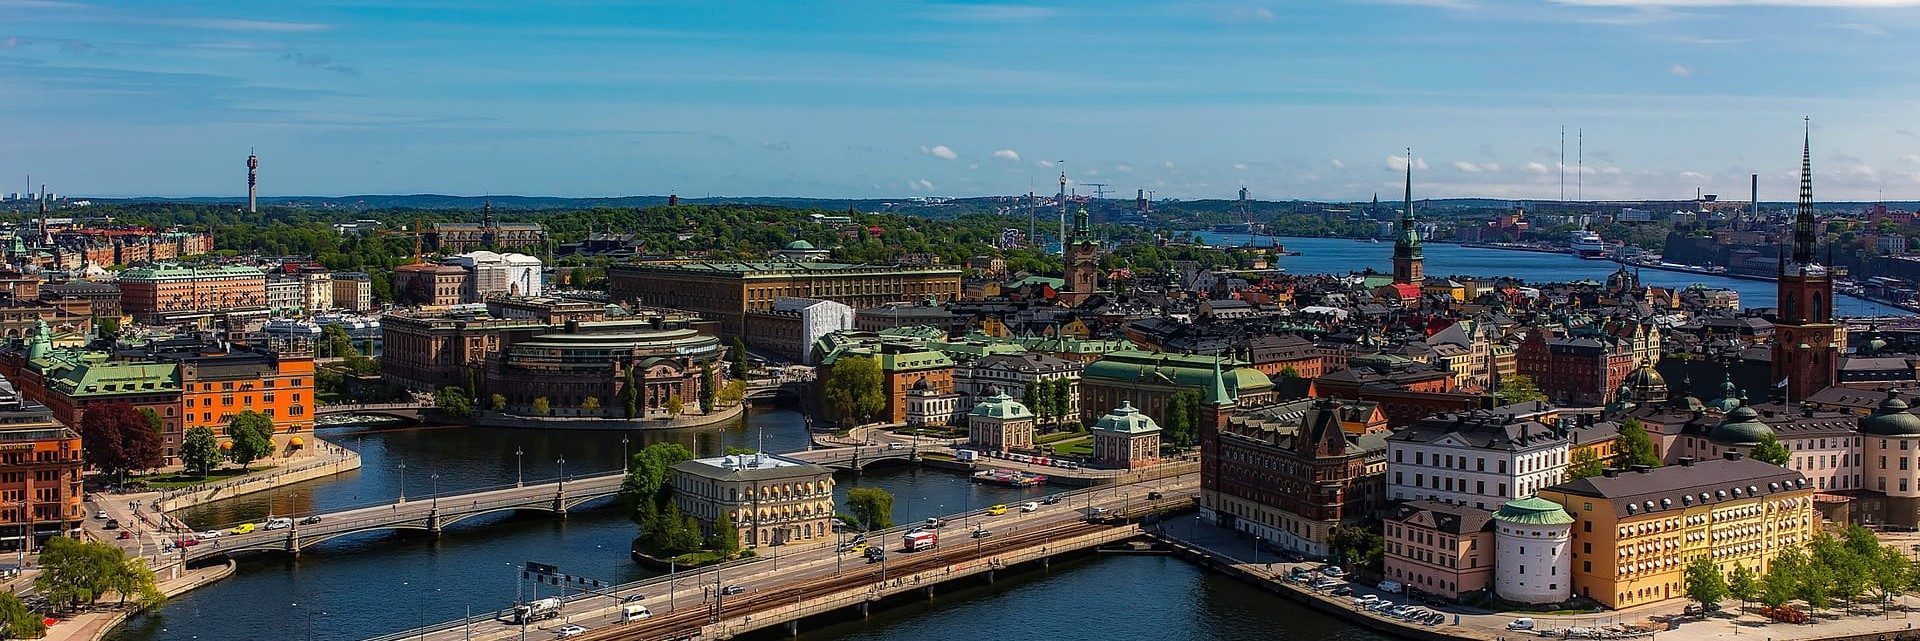 Stockholms stad skyline